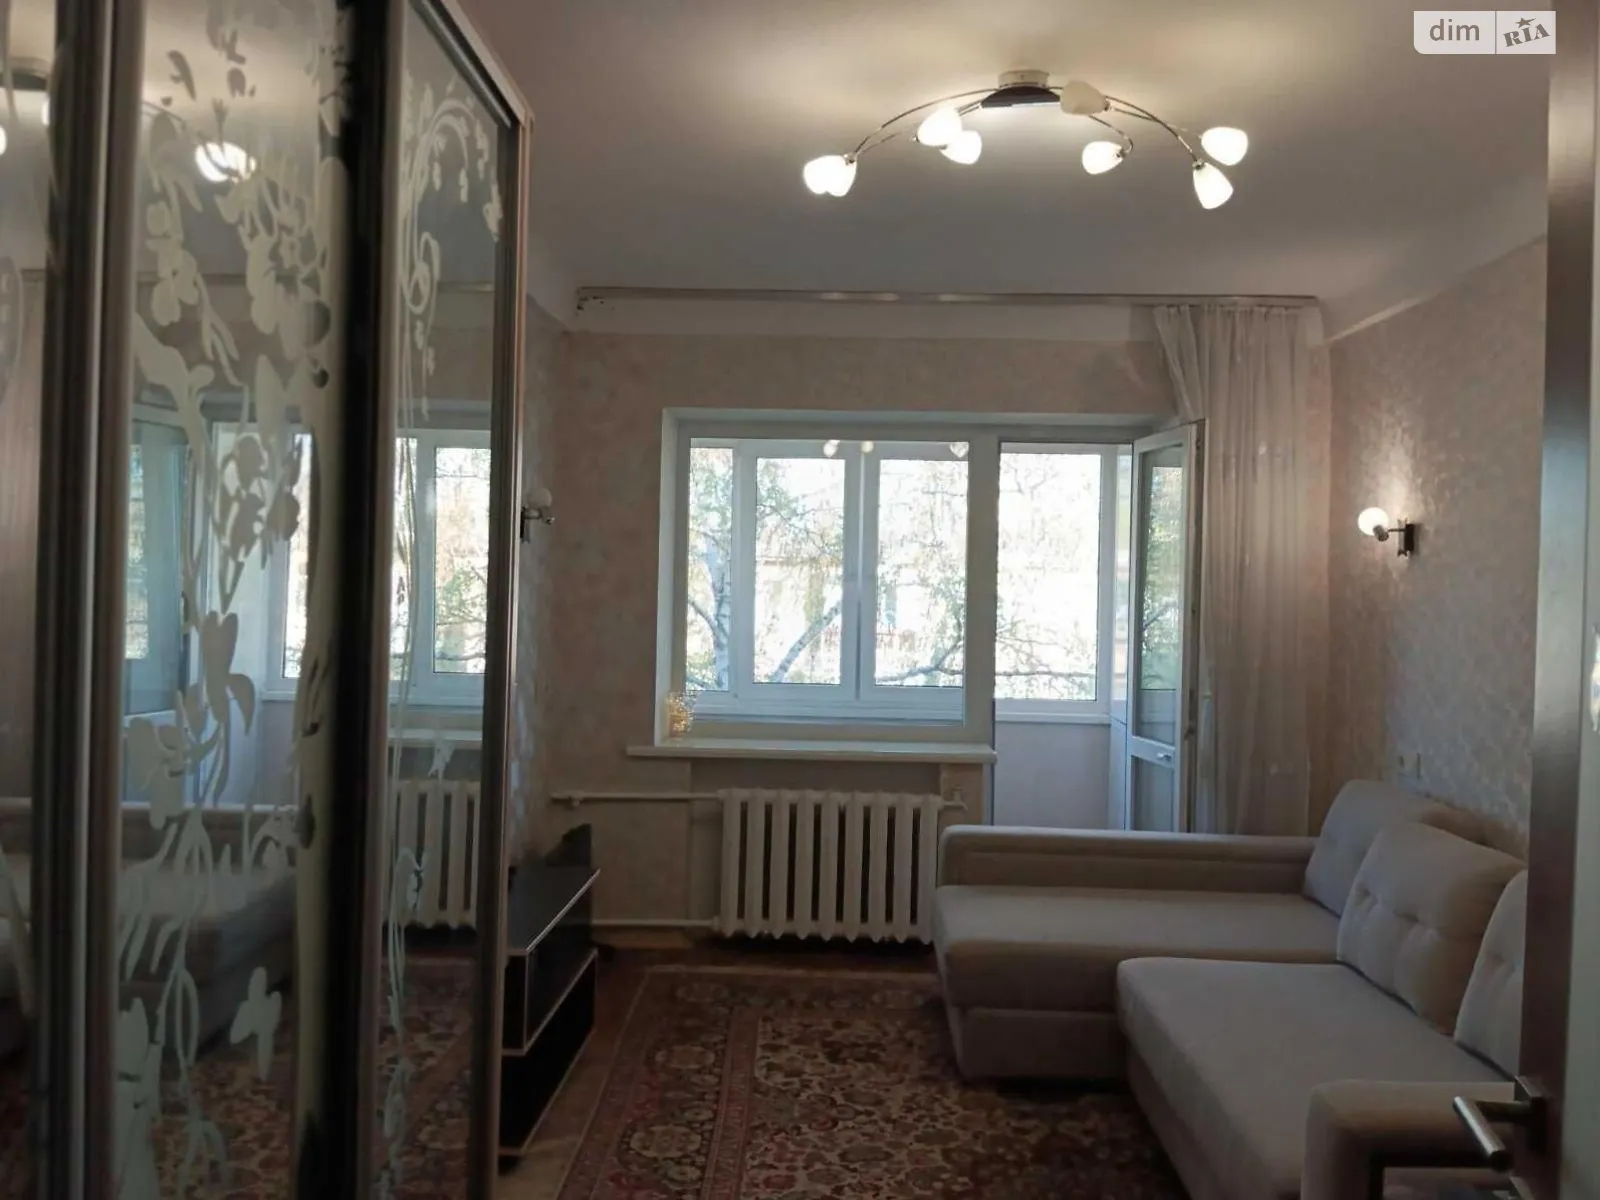 Продается комната 24 кв. м в Киеве, цена: 17800 $ - фото 1